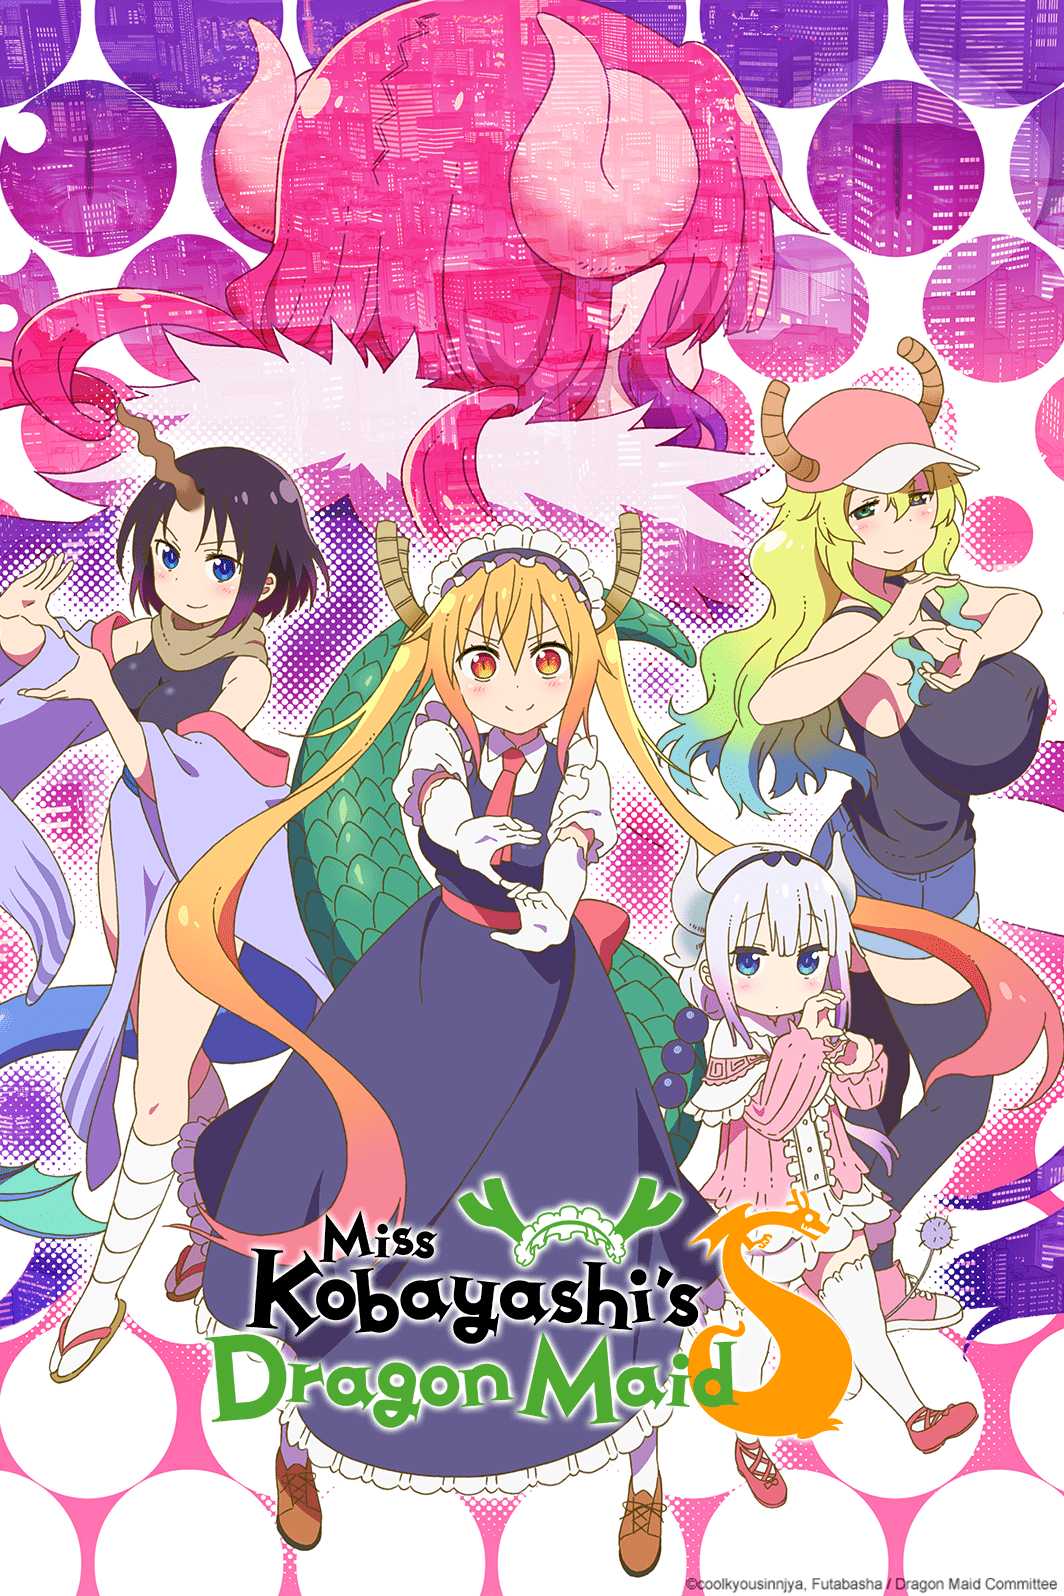 Crunchyroll Adds Miss Kobayashi's Dragon Maid Episode 14 - Anime Herald